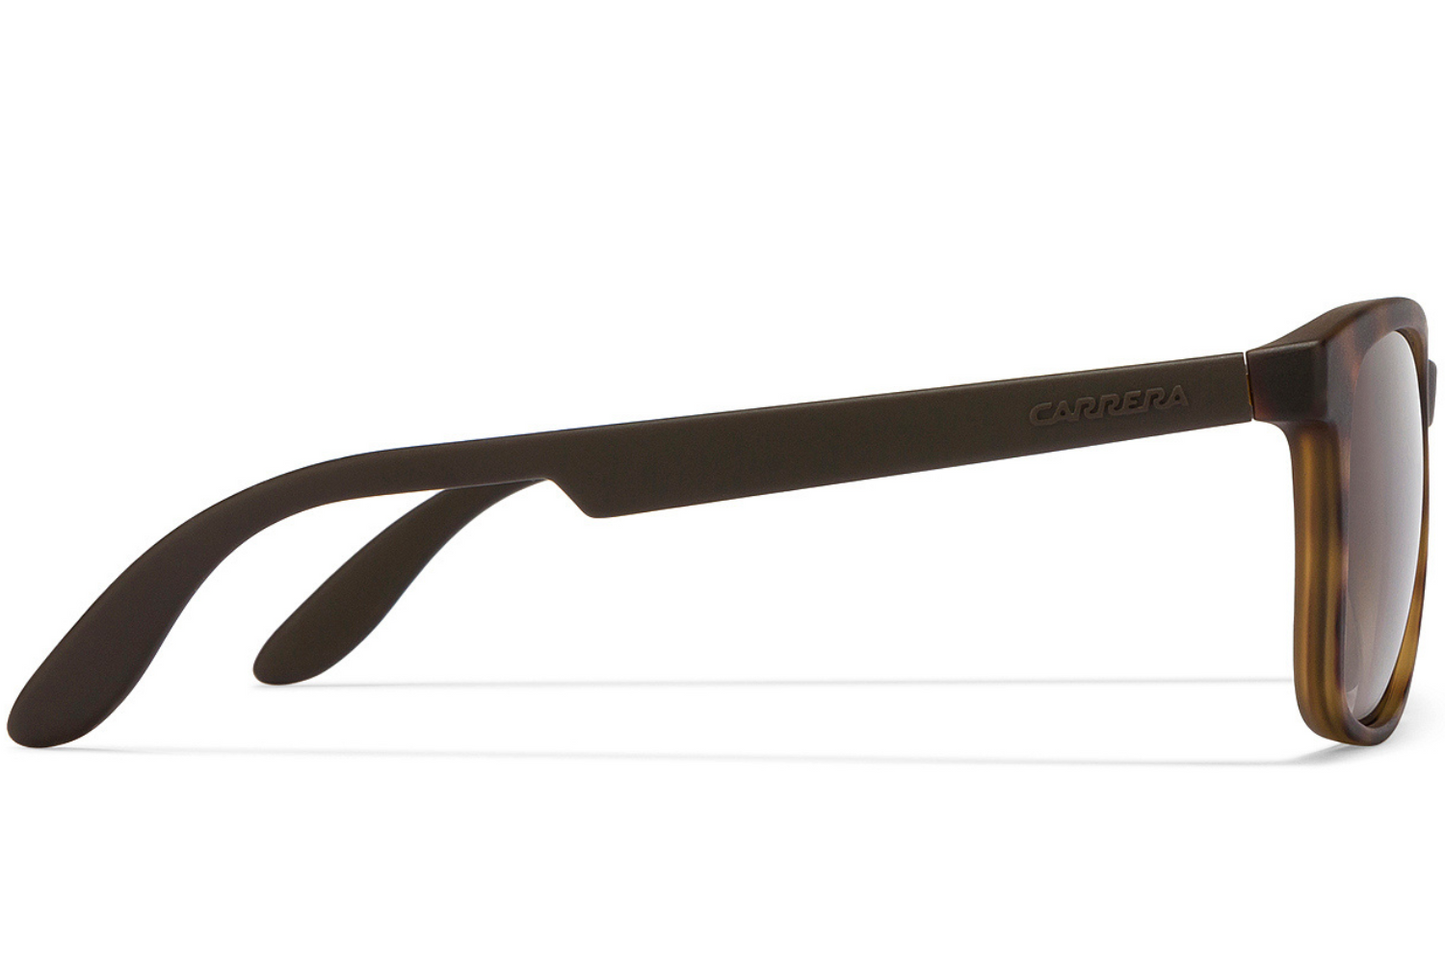 Carrera Sunglasses 9918/S 2XL